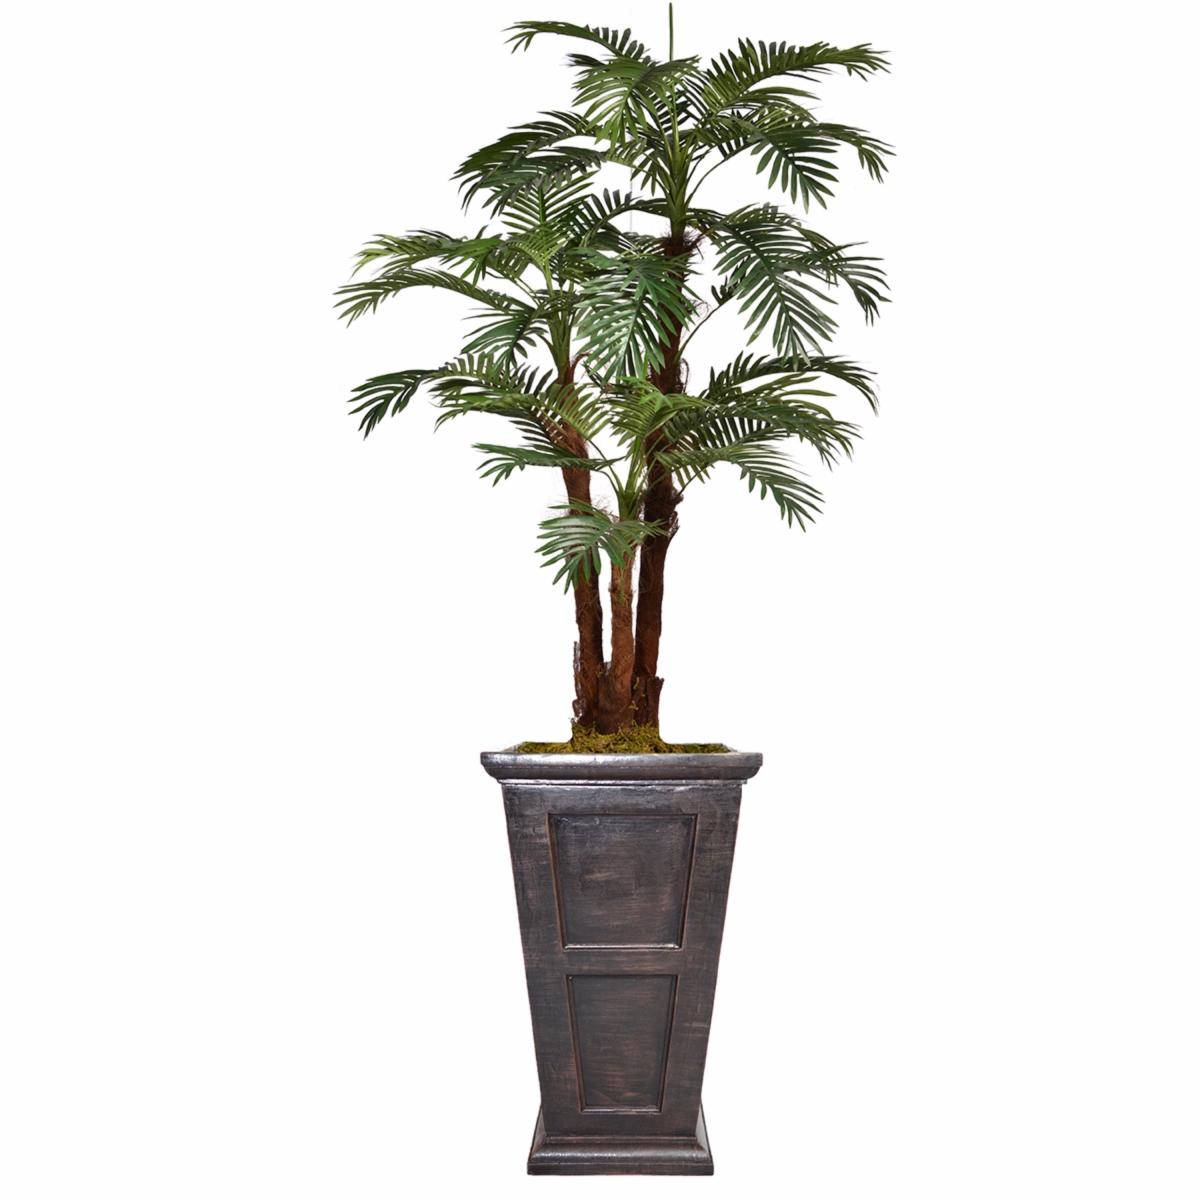 Vhx135201 84.8 In. Tall Palm Tree With Burlap Kit & Fiberstone Planter